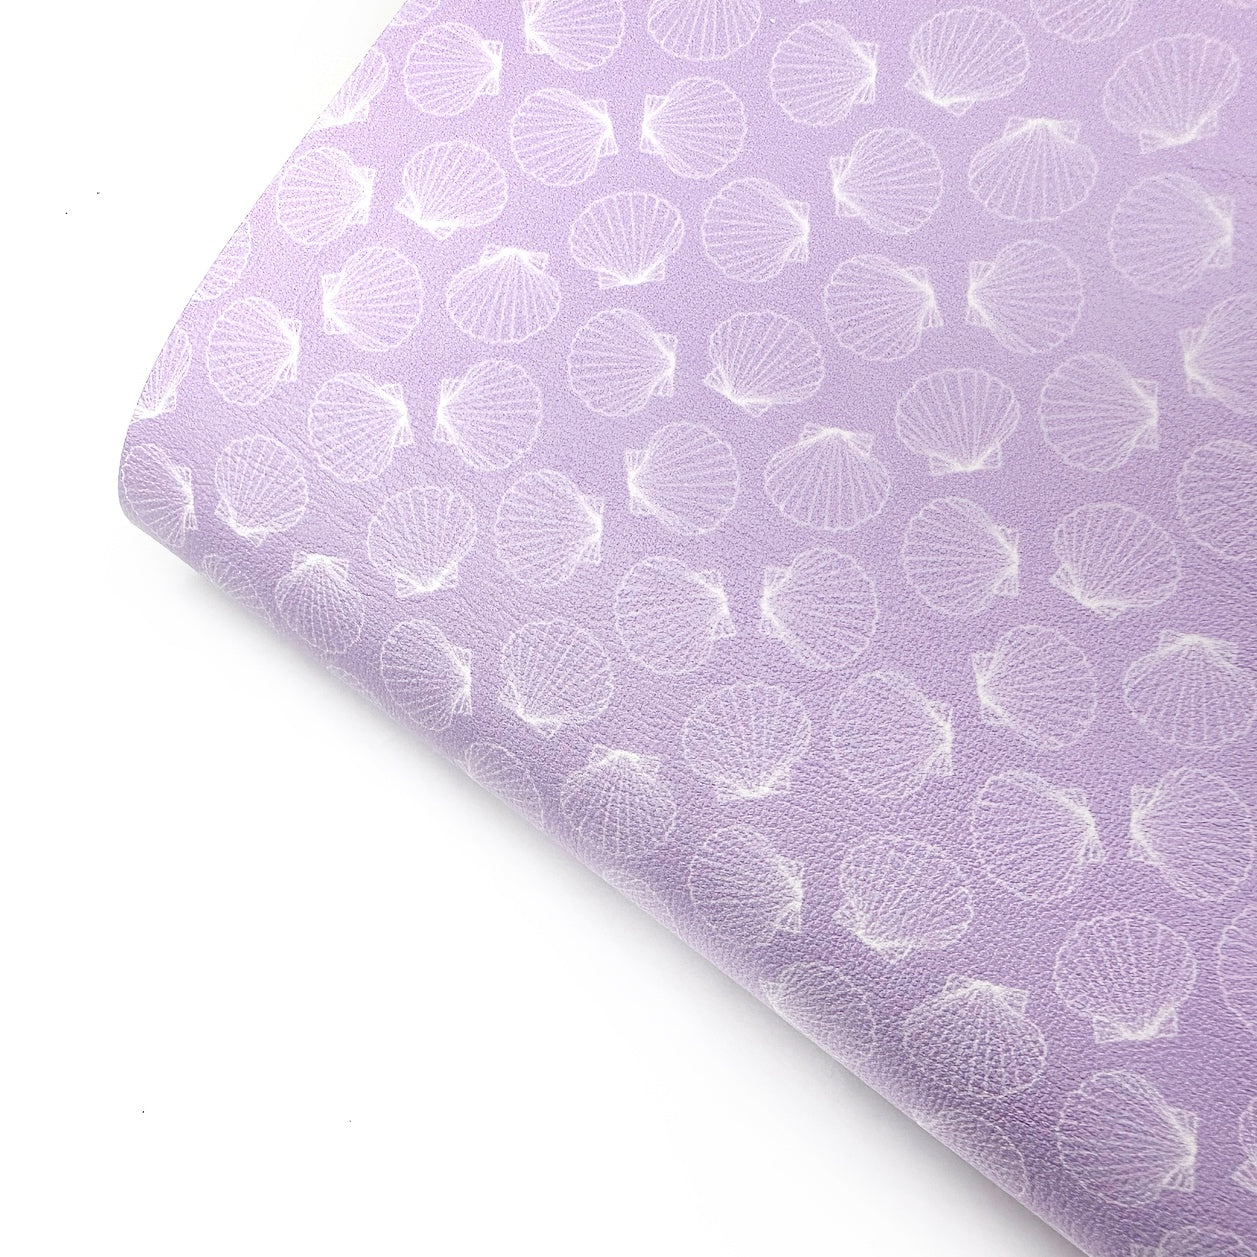 Lilac Seashells Premium Faux Leather Fabric Sheets